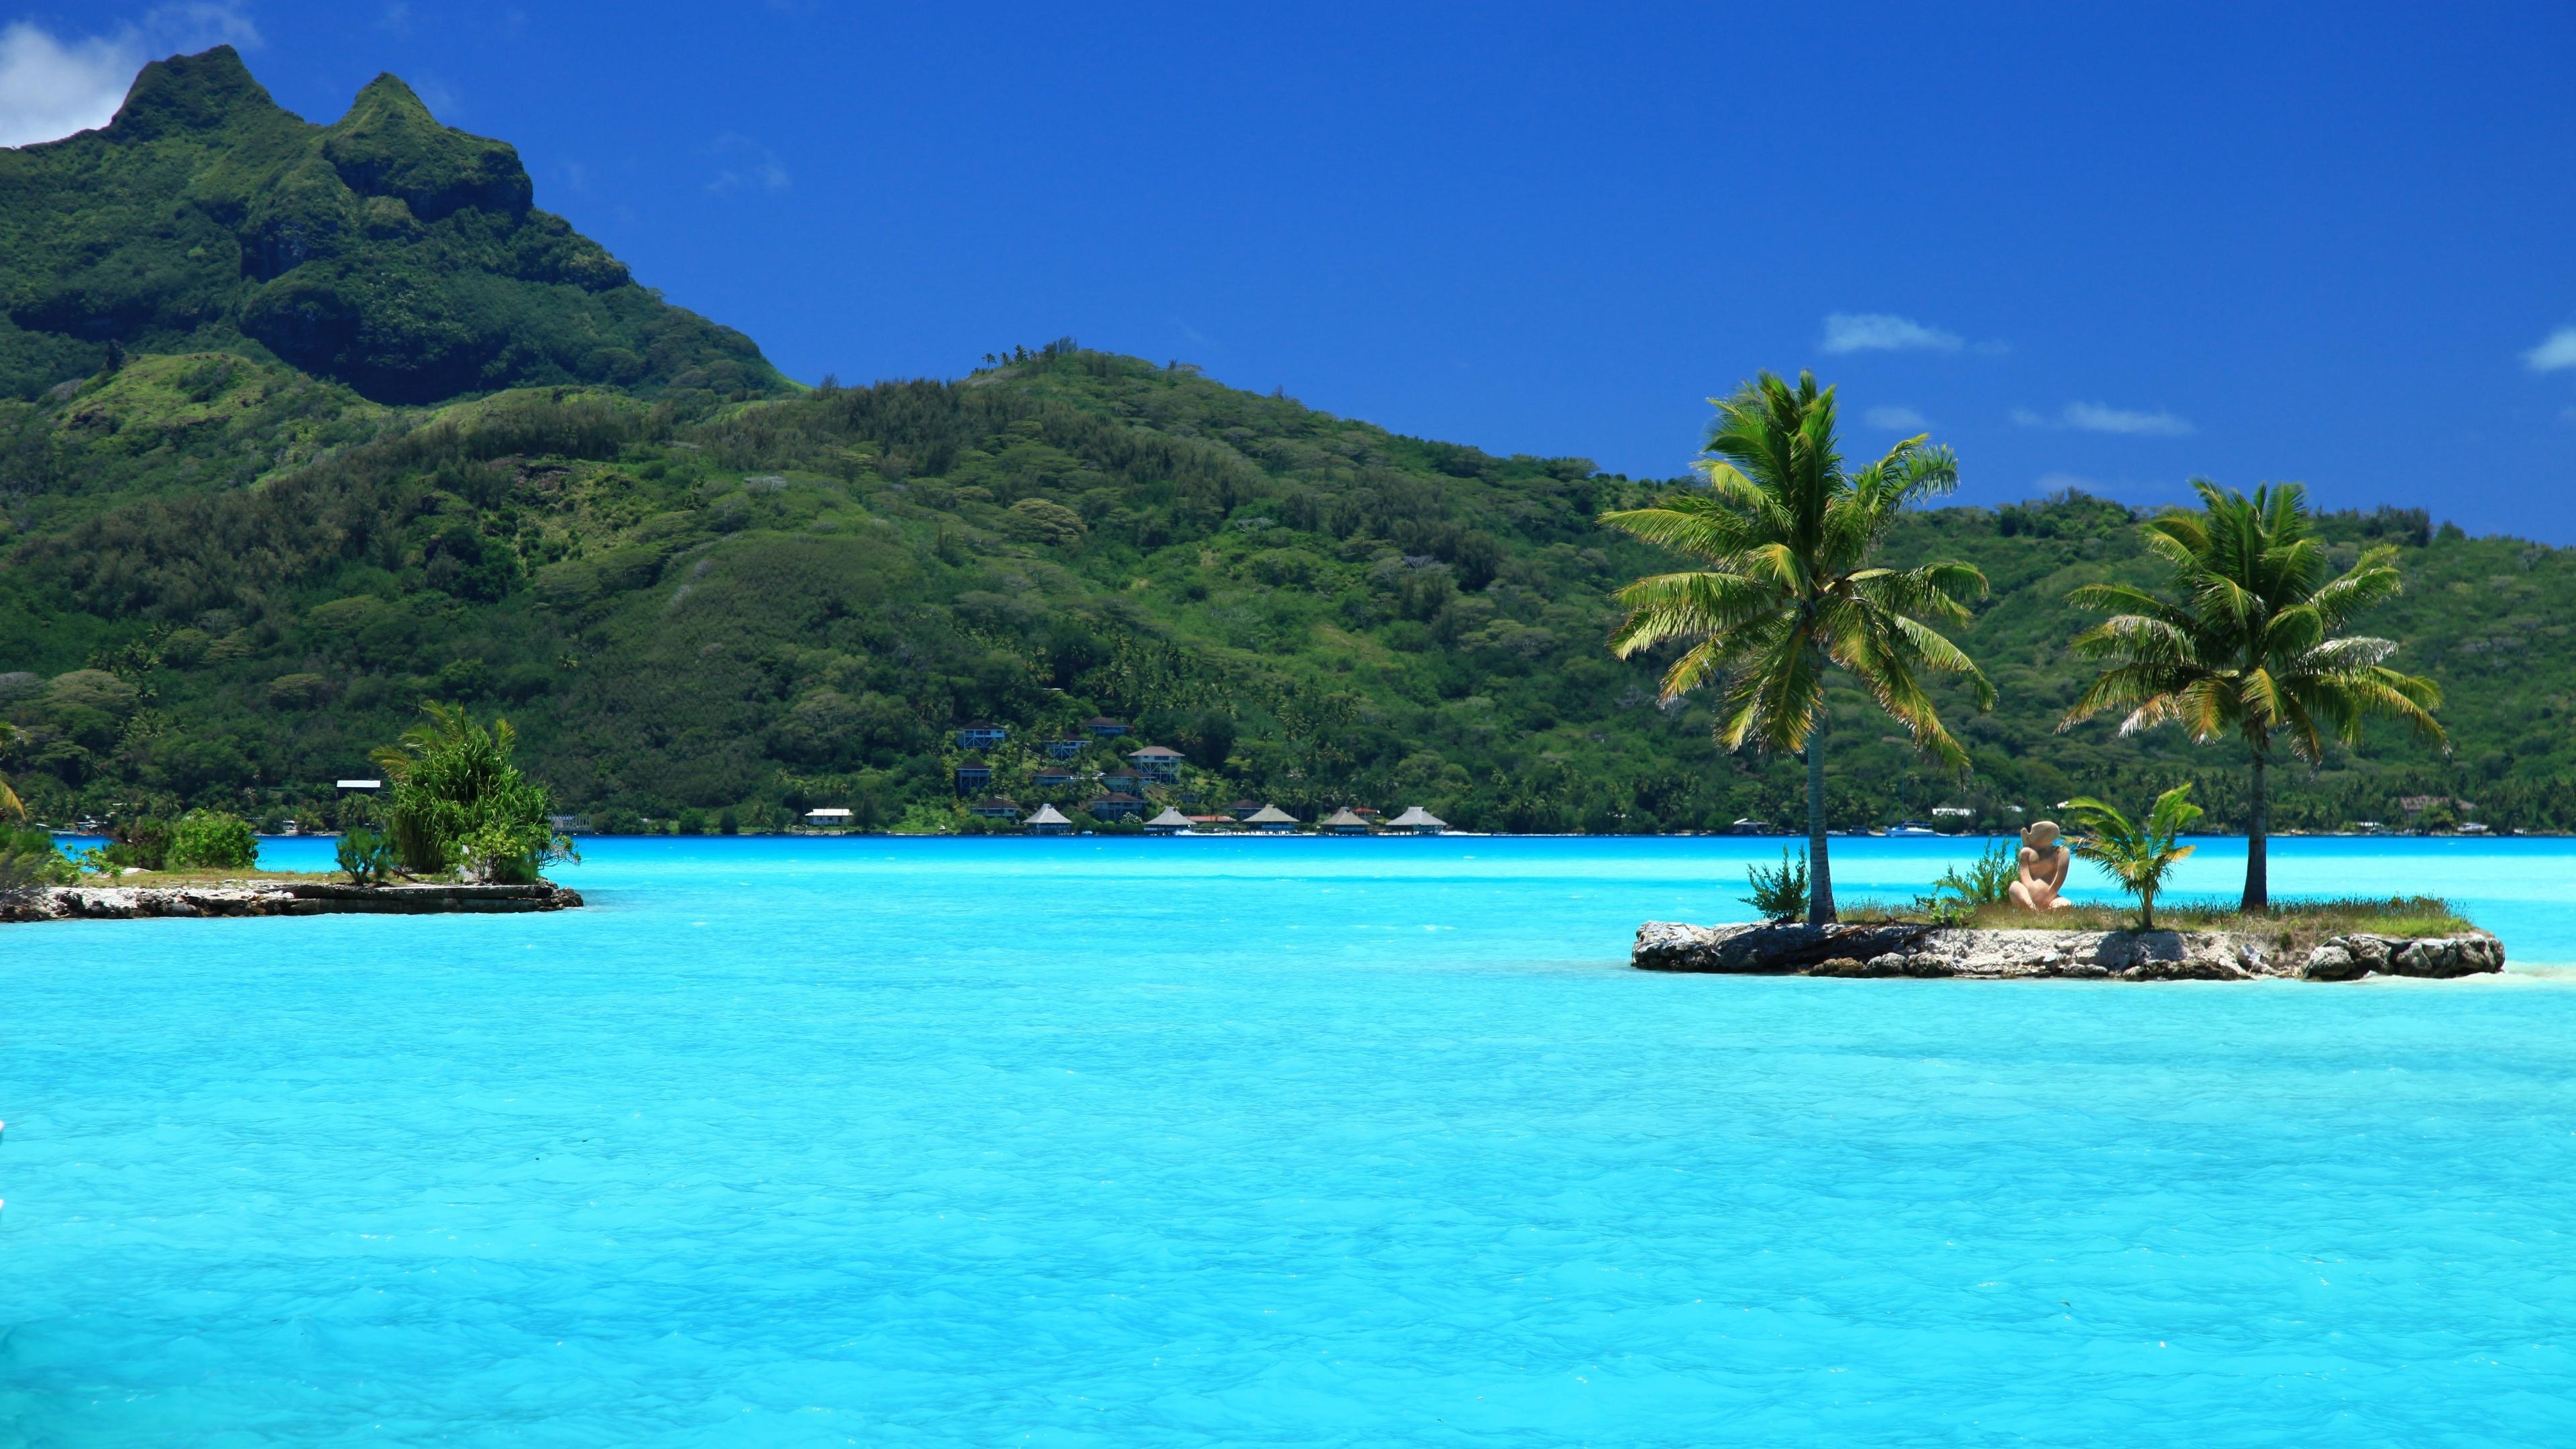 HD wallpaper, Tropical Paradise, Desktop 4K Tonga Background Image, 3840X2160 4K Desktop, Popular Backgrounds, Tonga Travels, Palm Tree Island